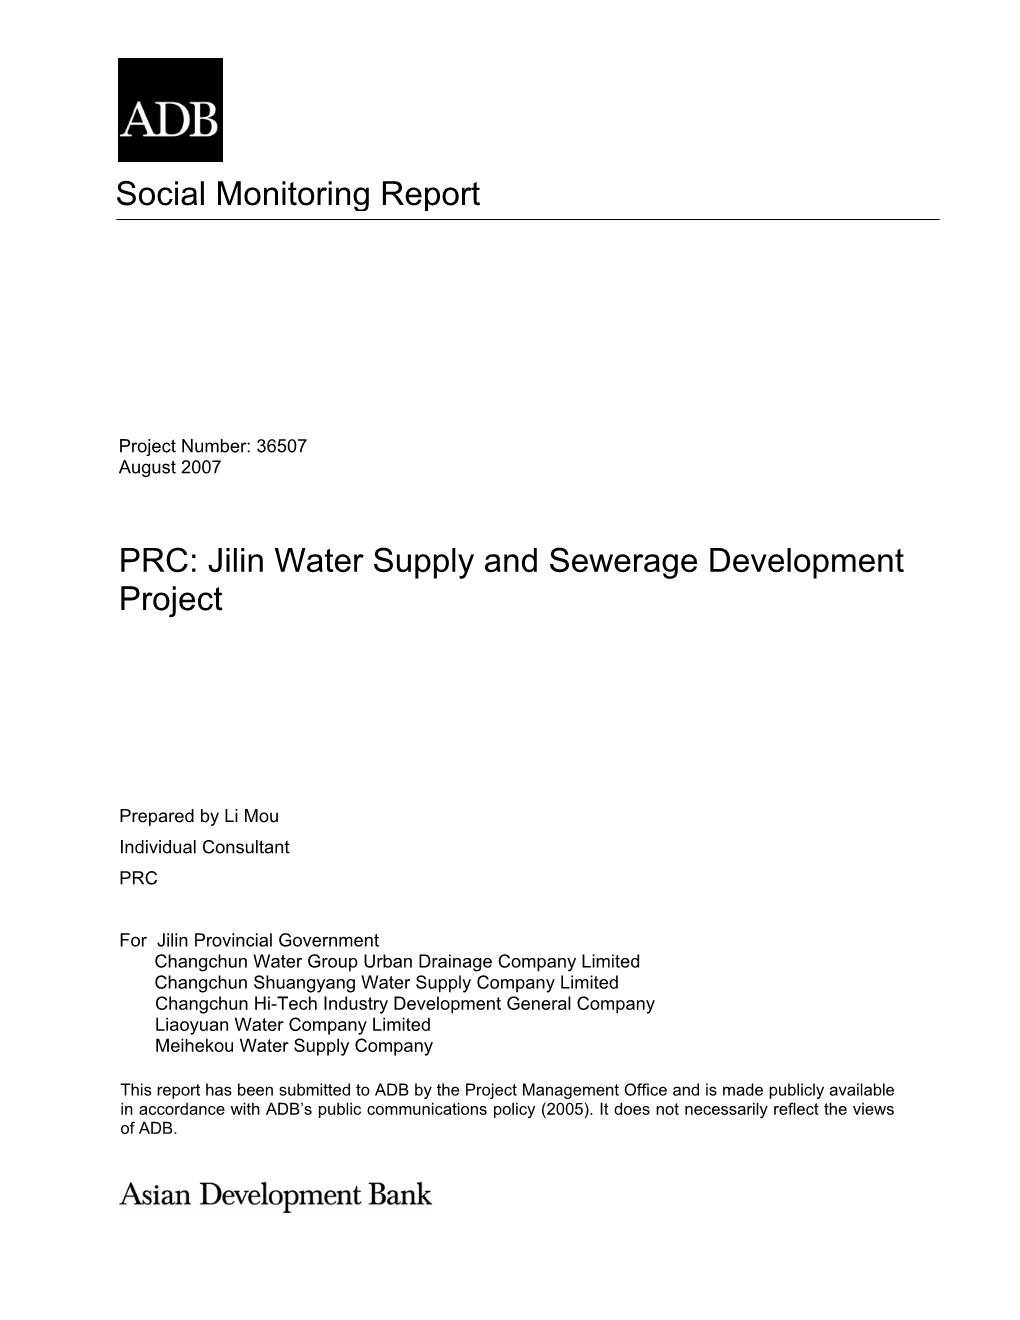 Jilin Water Supply and Sewerage Development Project